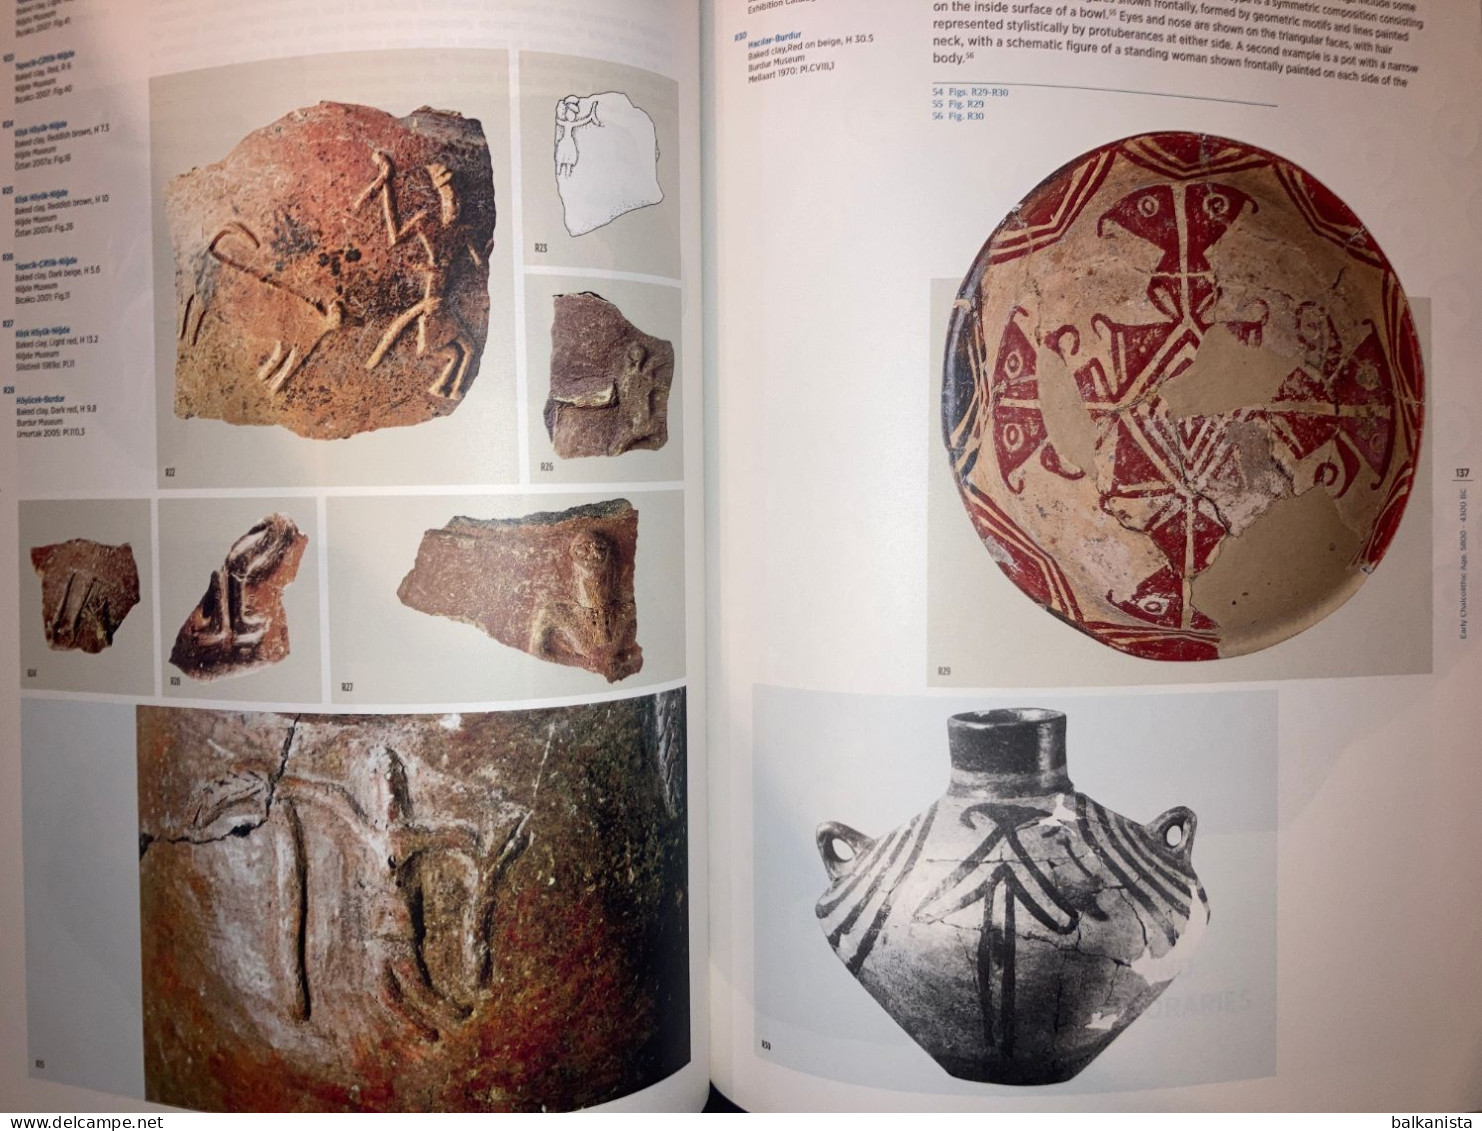 Anthropomorphic Representations In Anatolia Archaeology Anatolia - Antiquité